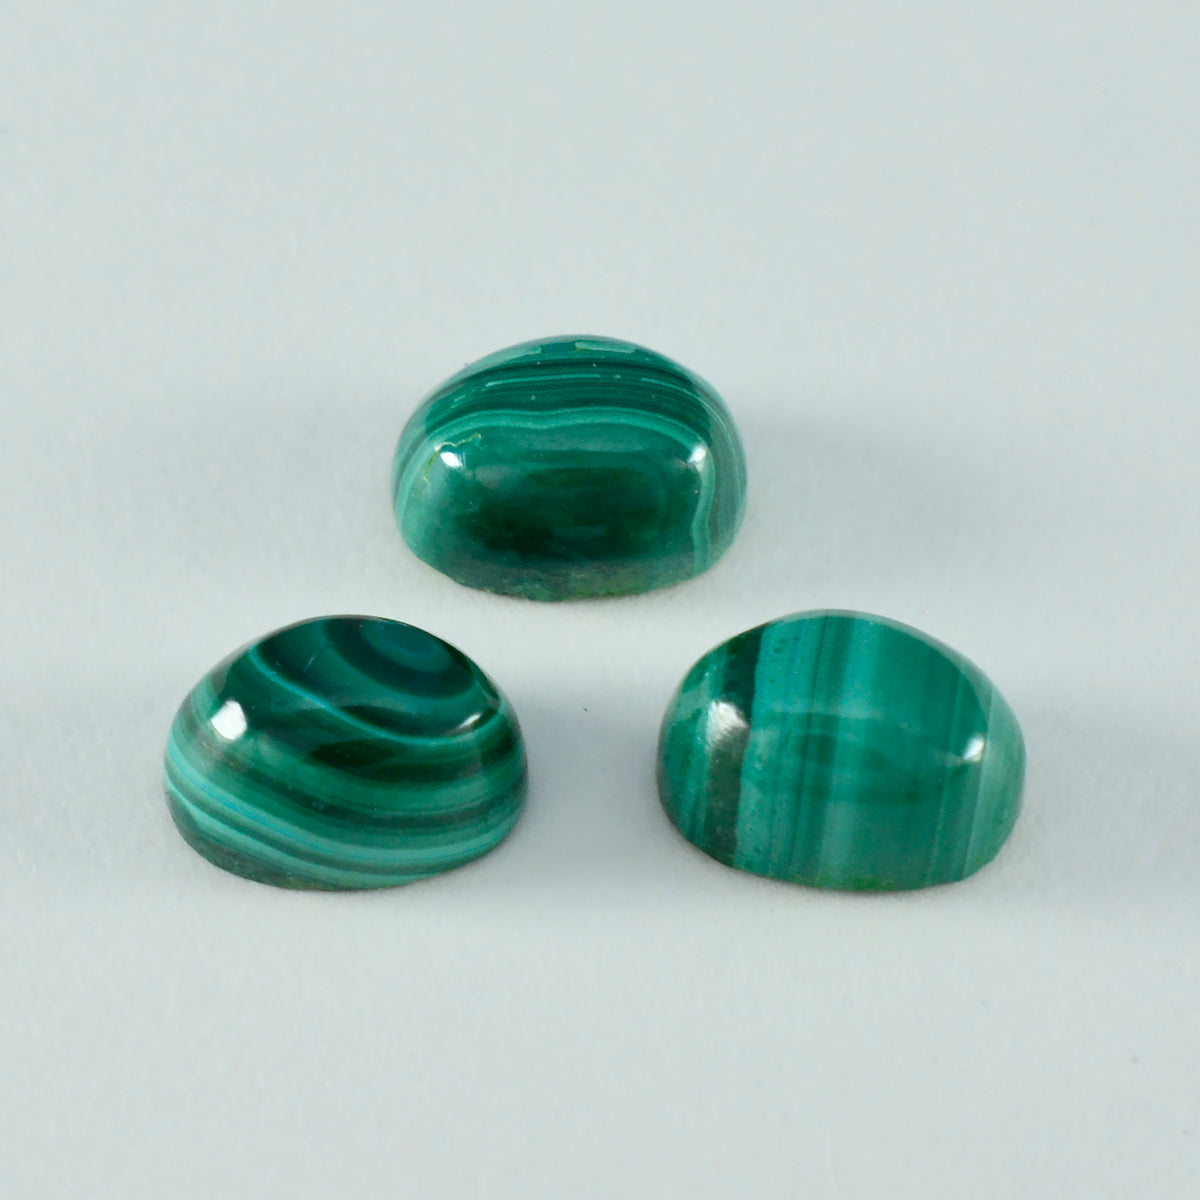 Riyogems 1 Stück grüner Malachit-Cabochon, 3 x 5 mm, ovale Form, wunderbarer, hochwertiger, loser Edelstein